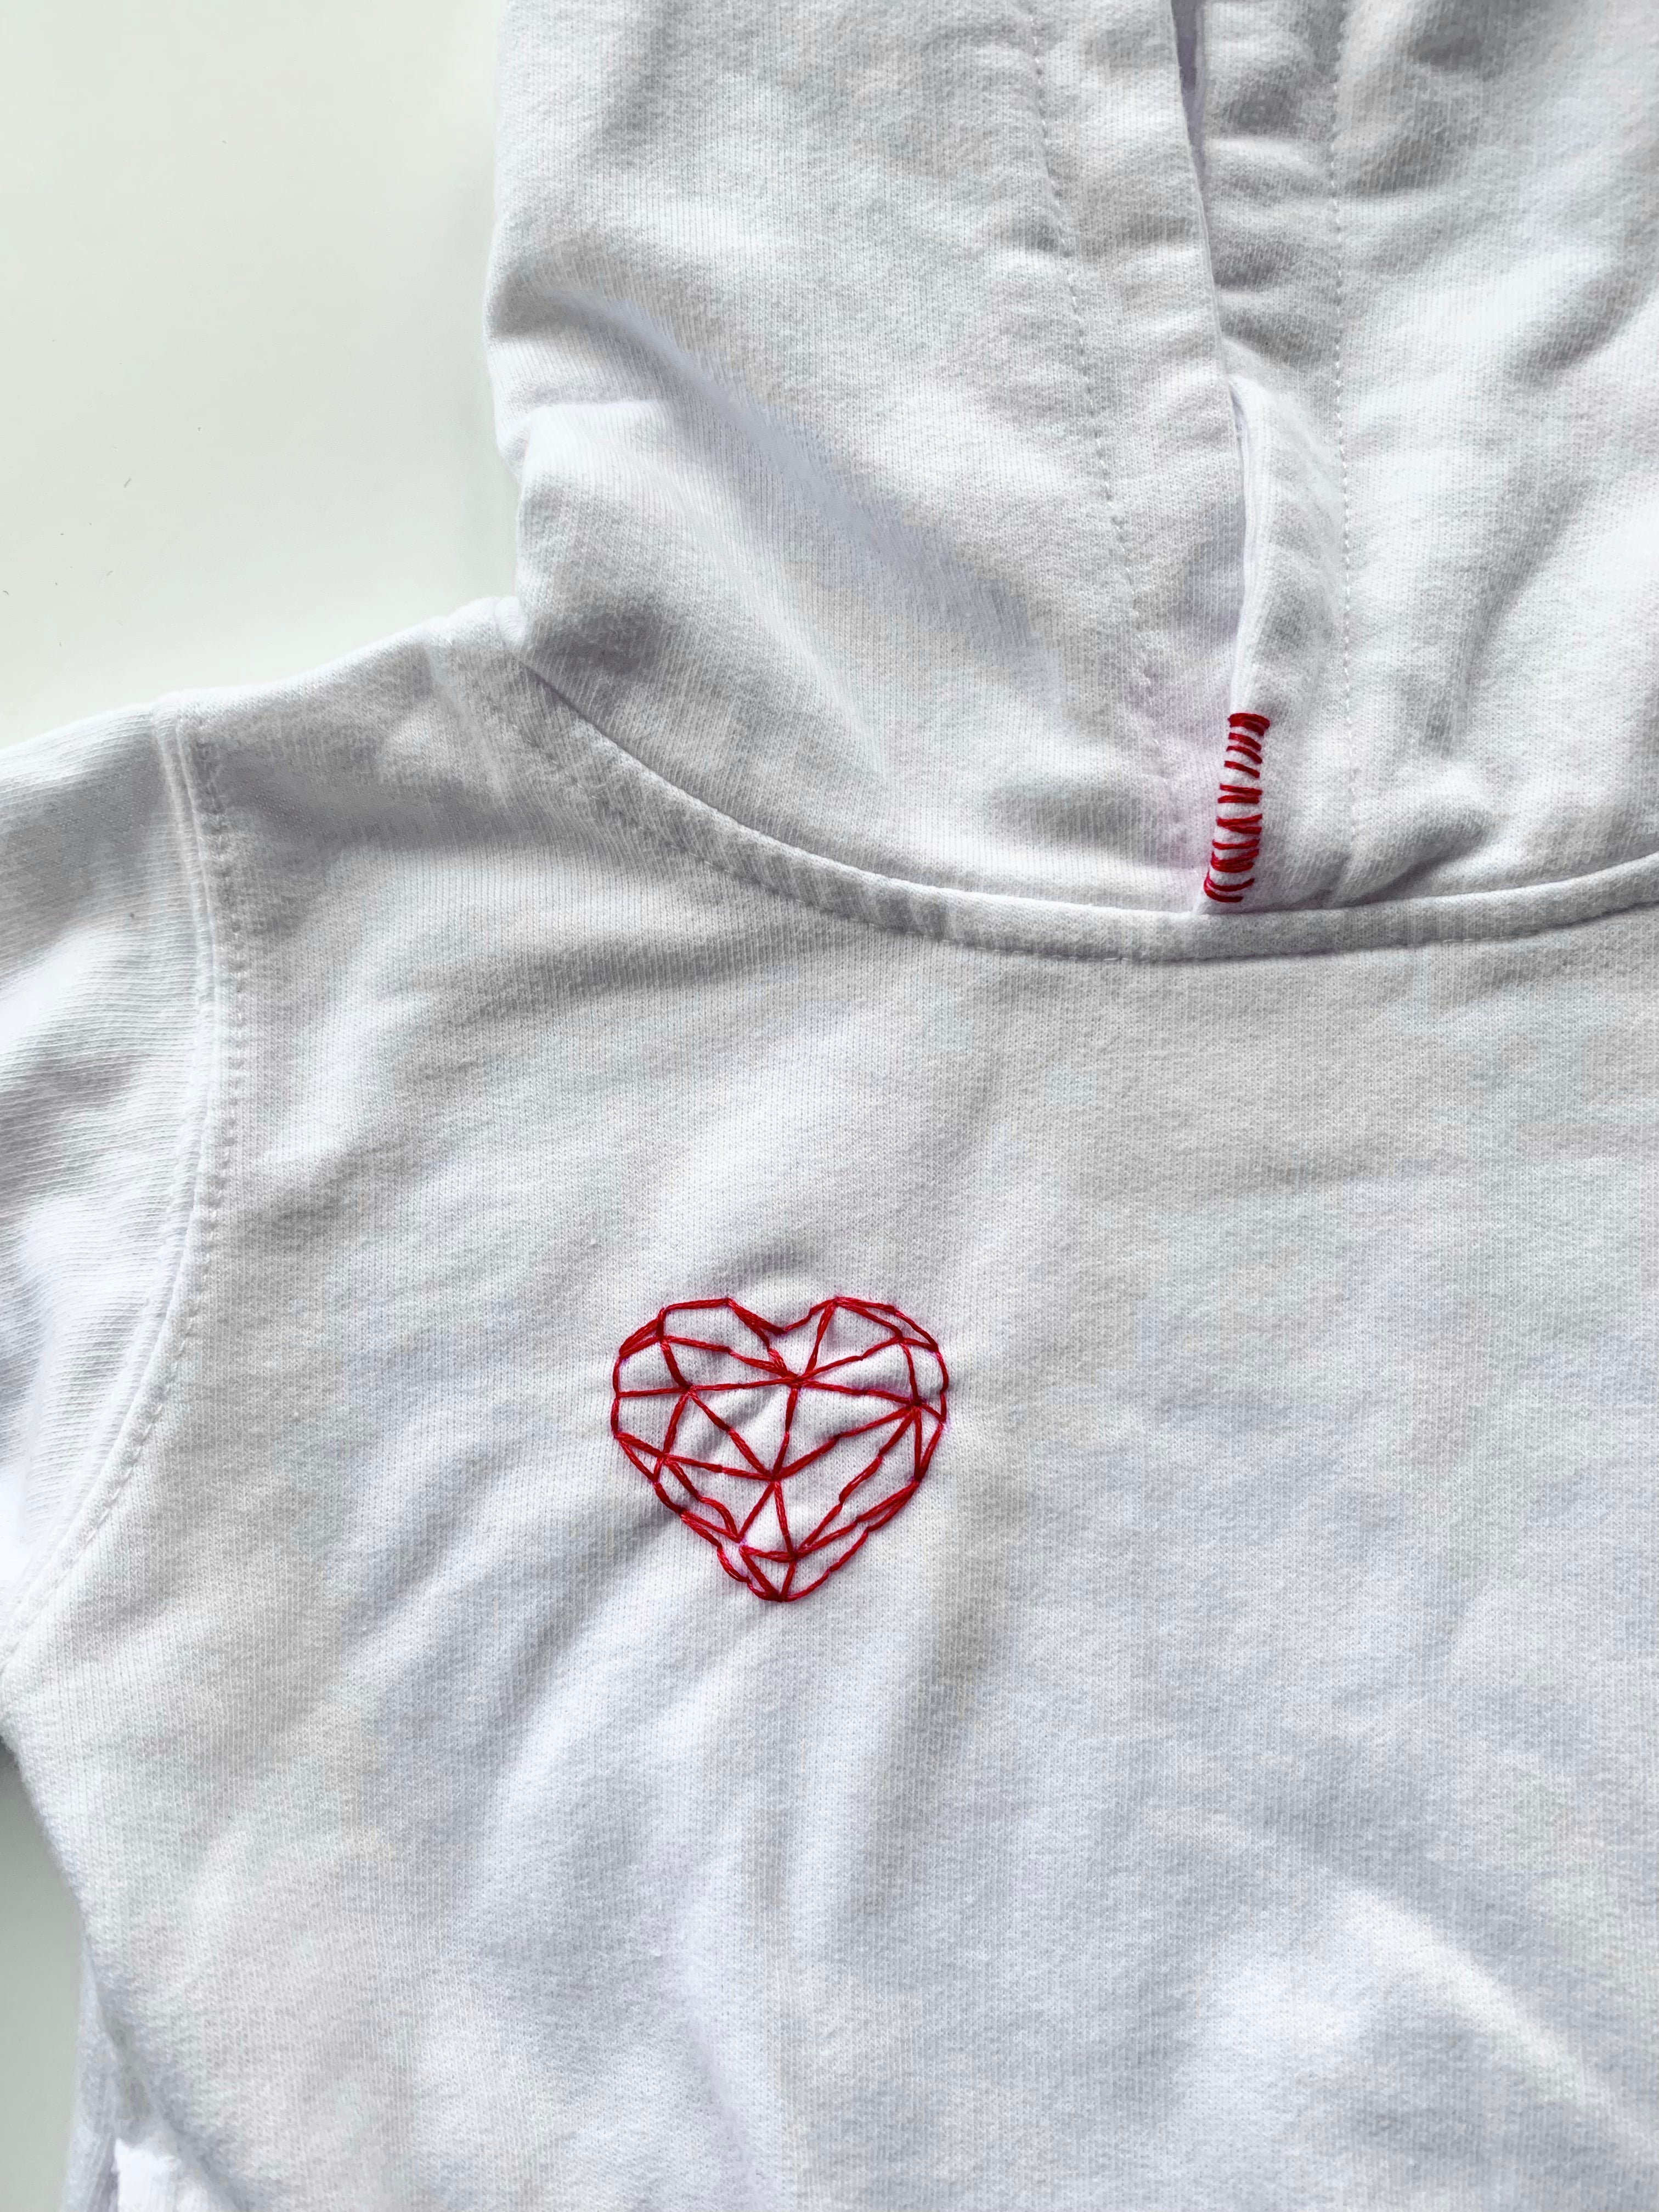 Hand Embroidered Sweatshirt or Onesie for CHD